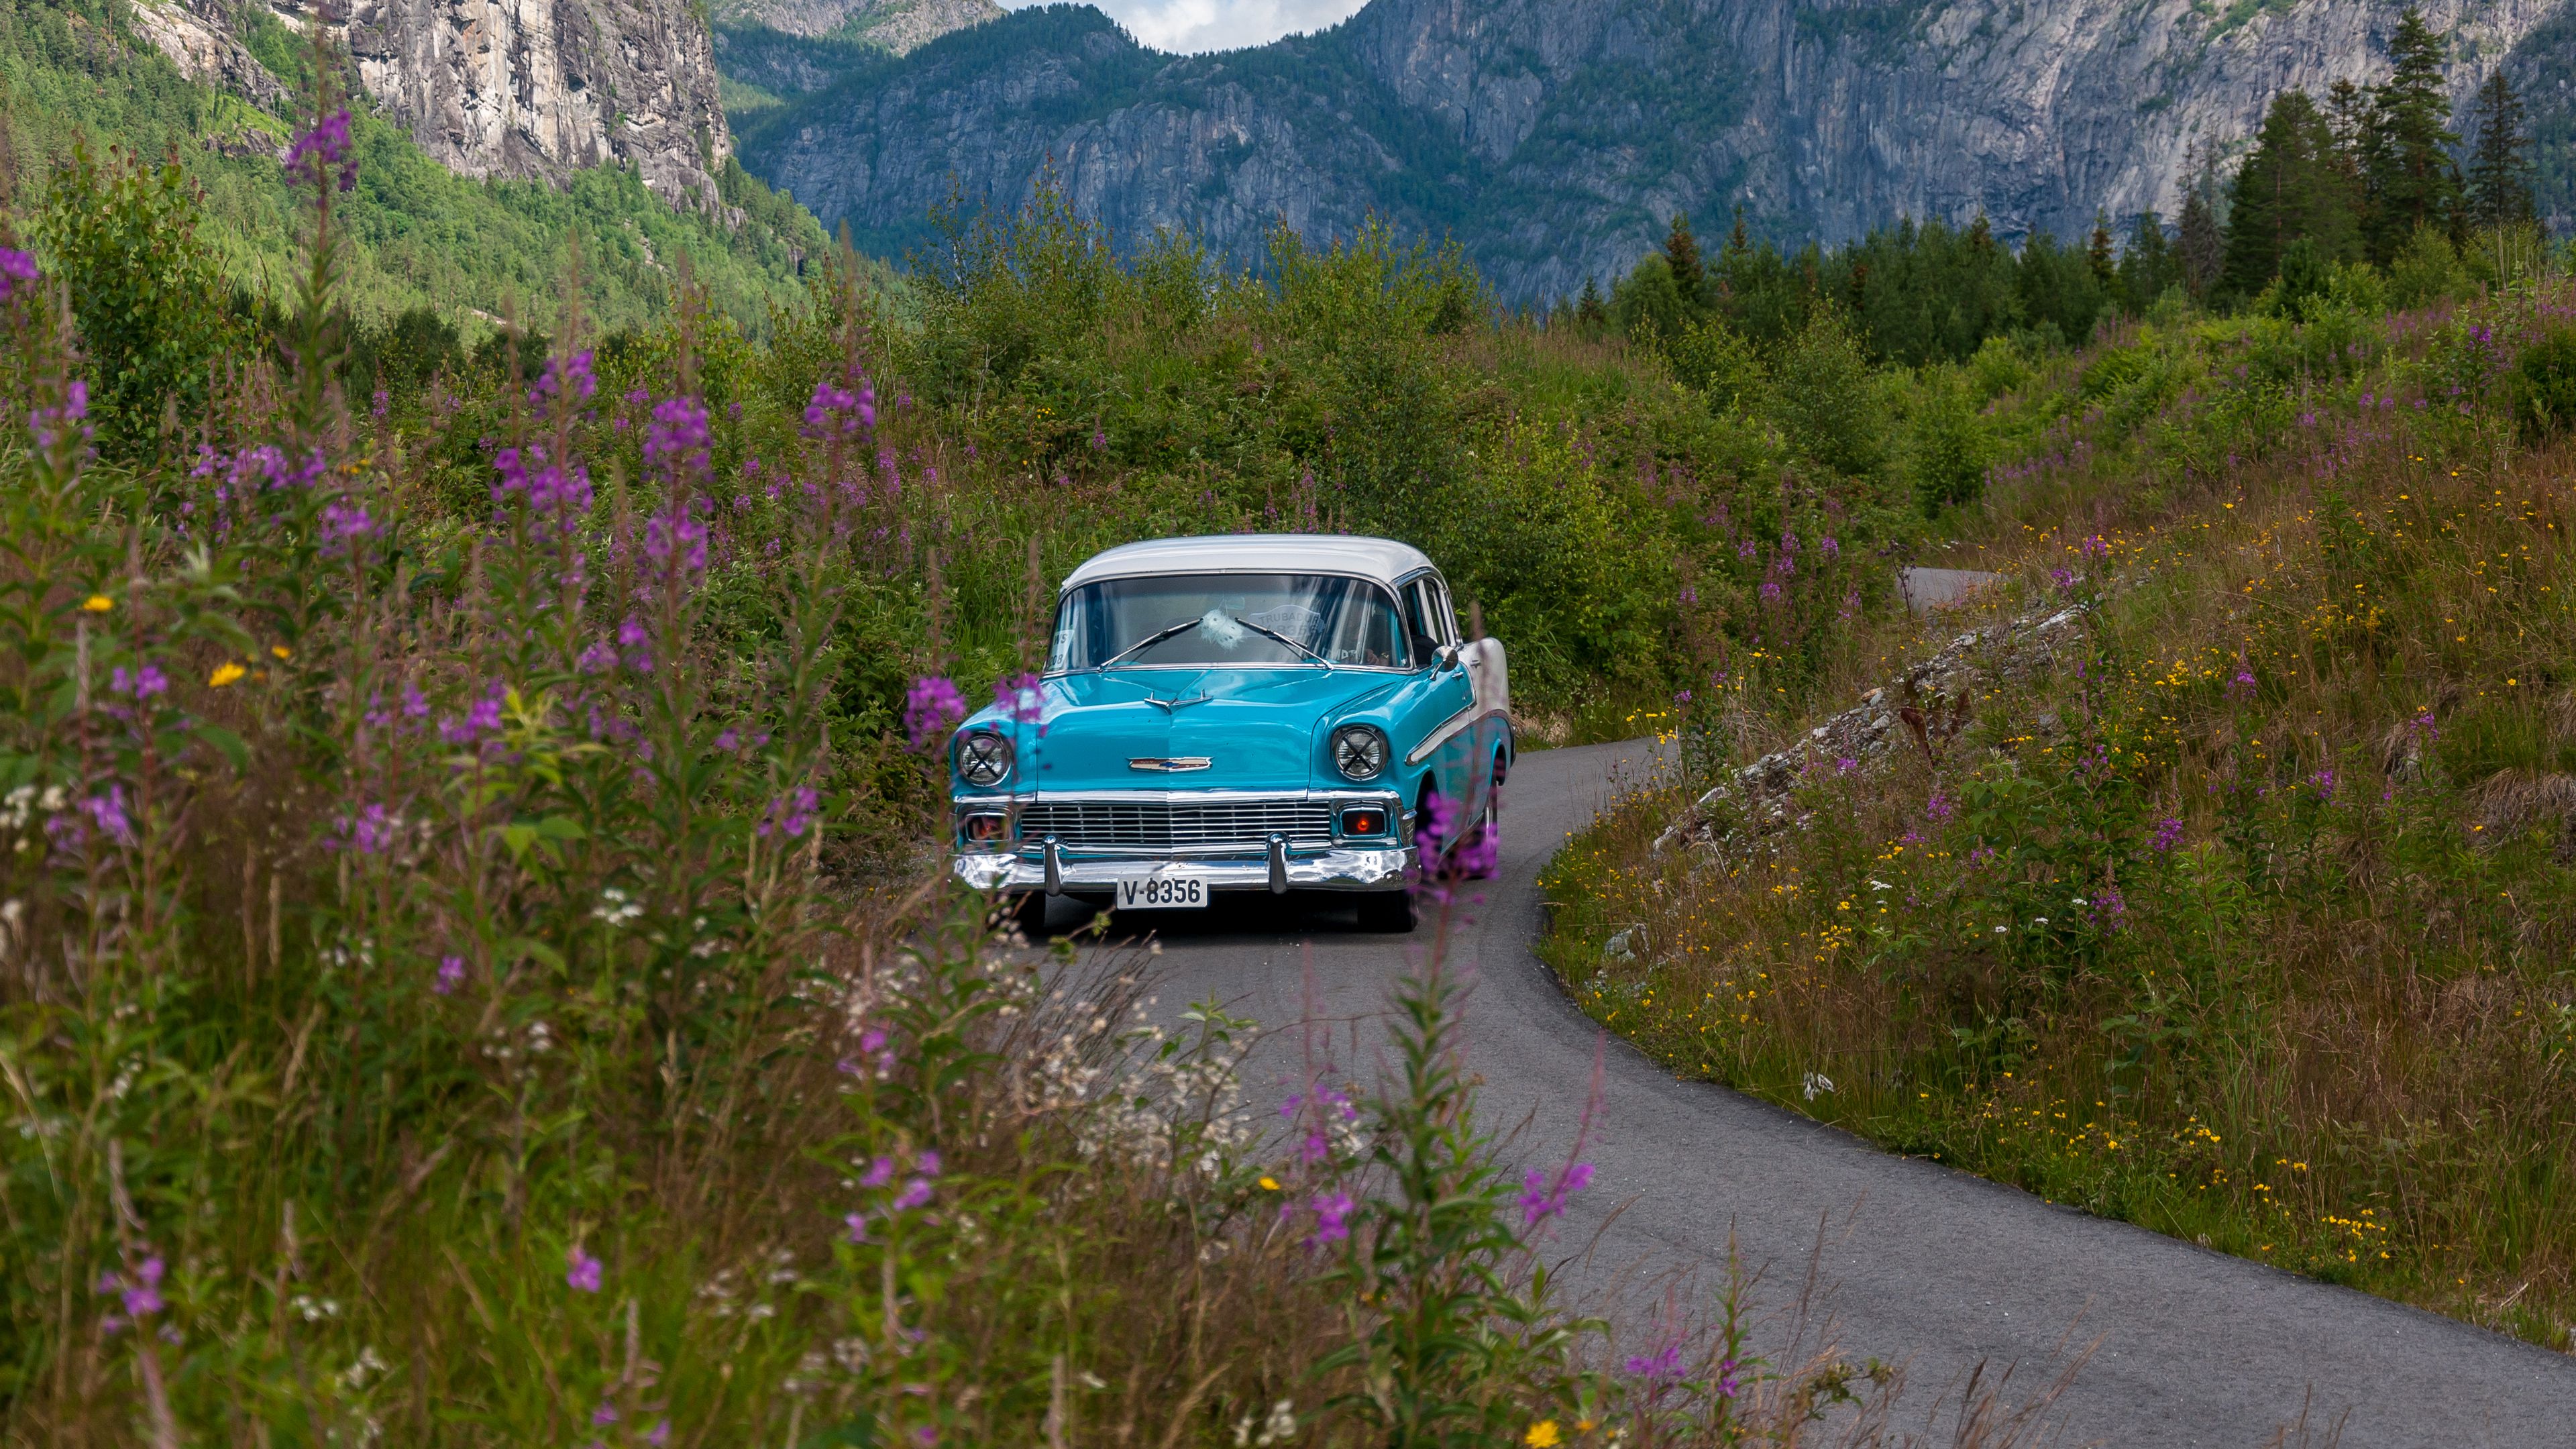 Download wallpaper 3840x2160 car, retro, blue, road, field, landscape